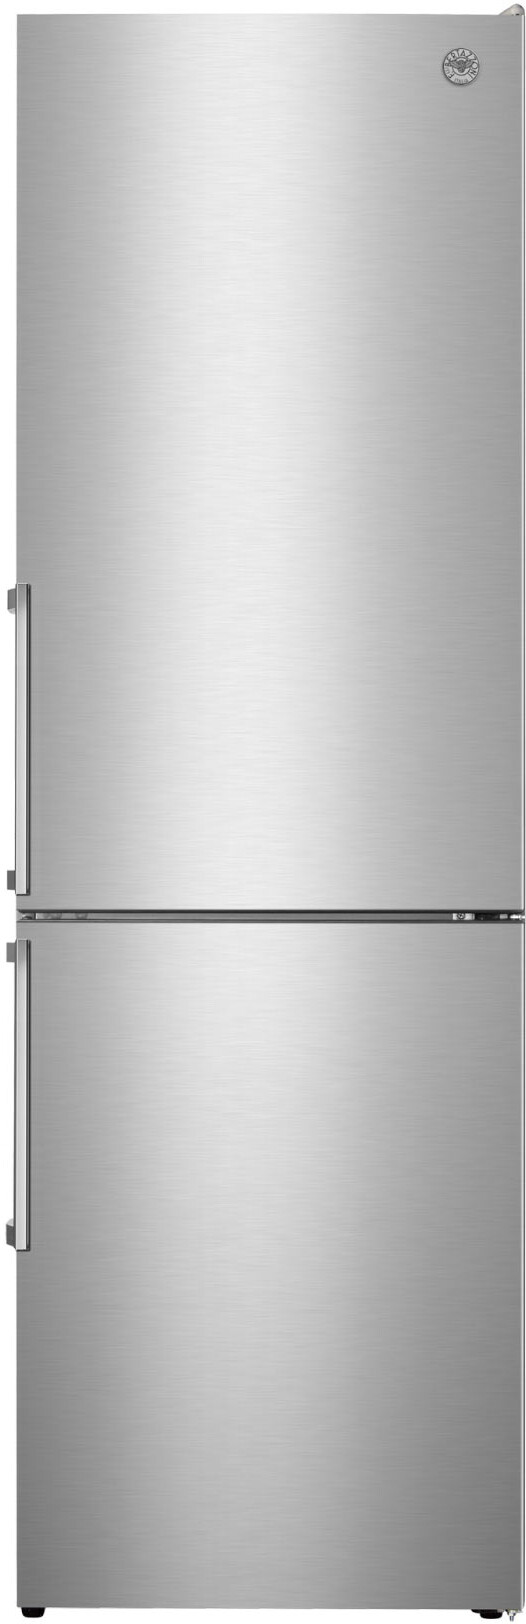 Bertazzoni 23 Inch Professional 23 Counter Depth Bottom Freezer Refrigerator REF24BMFXNV